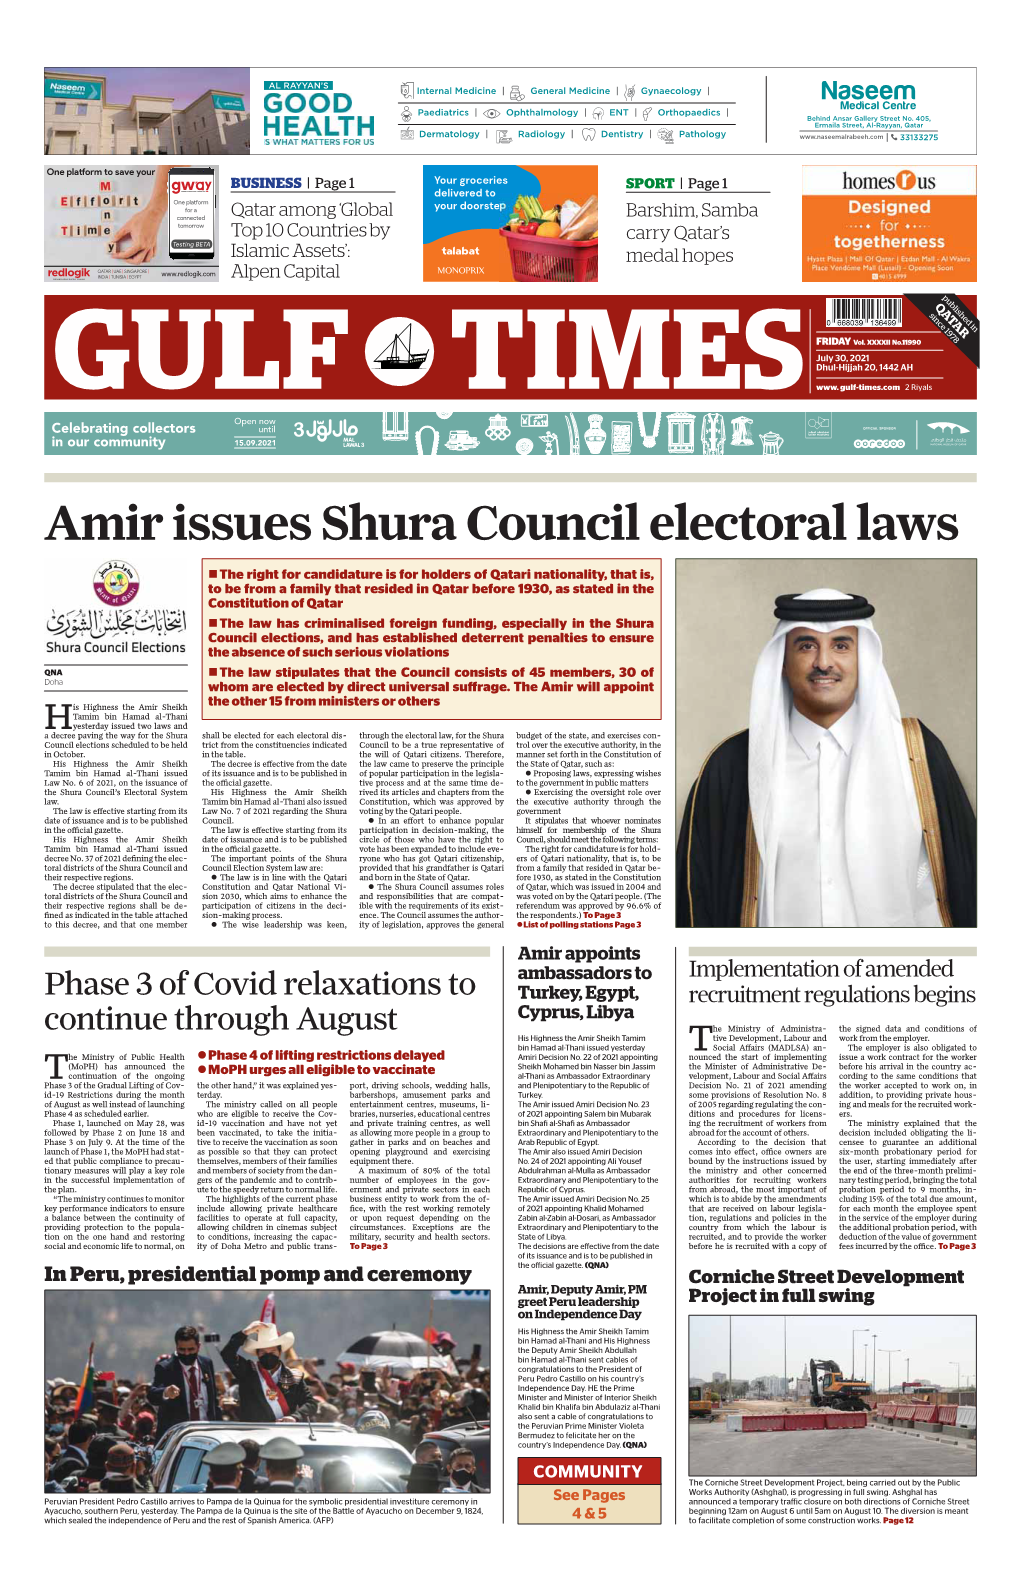 Amir Issues Shura Council Electoral Laws